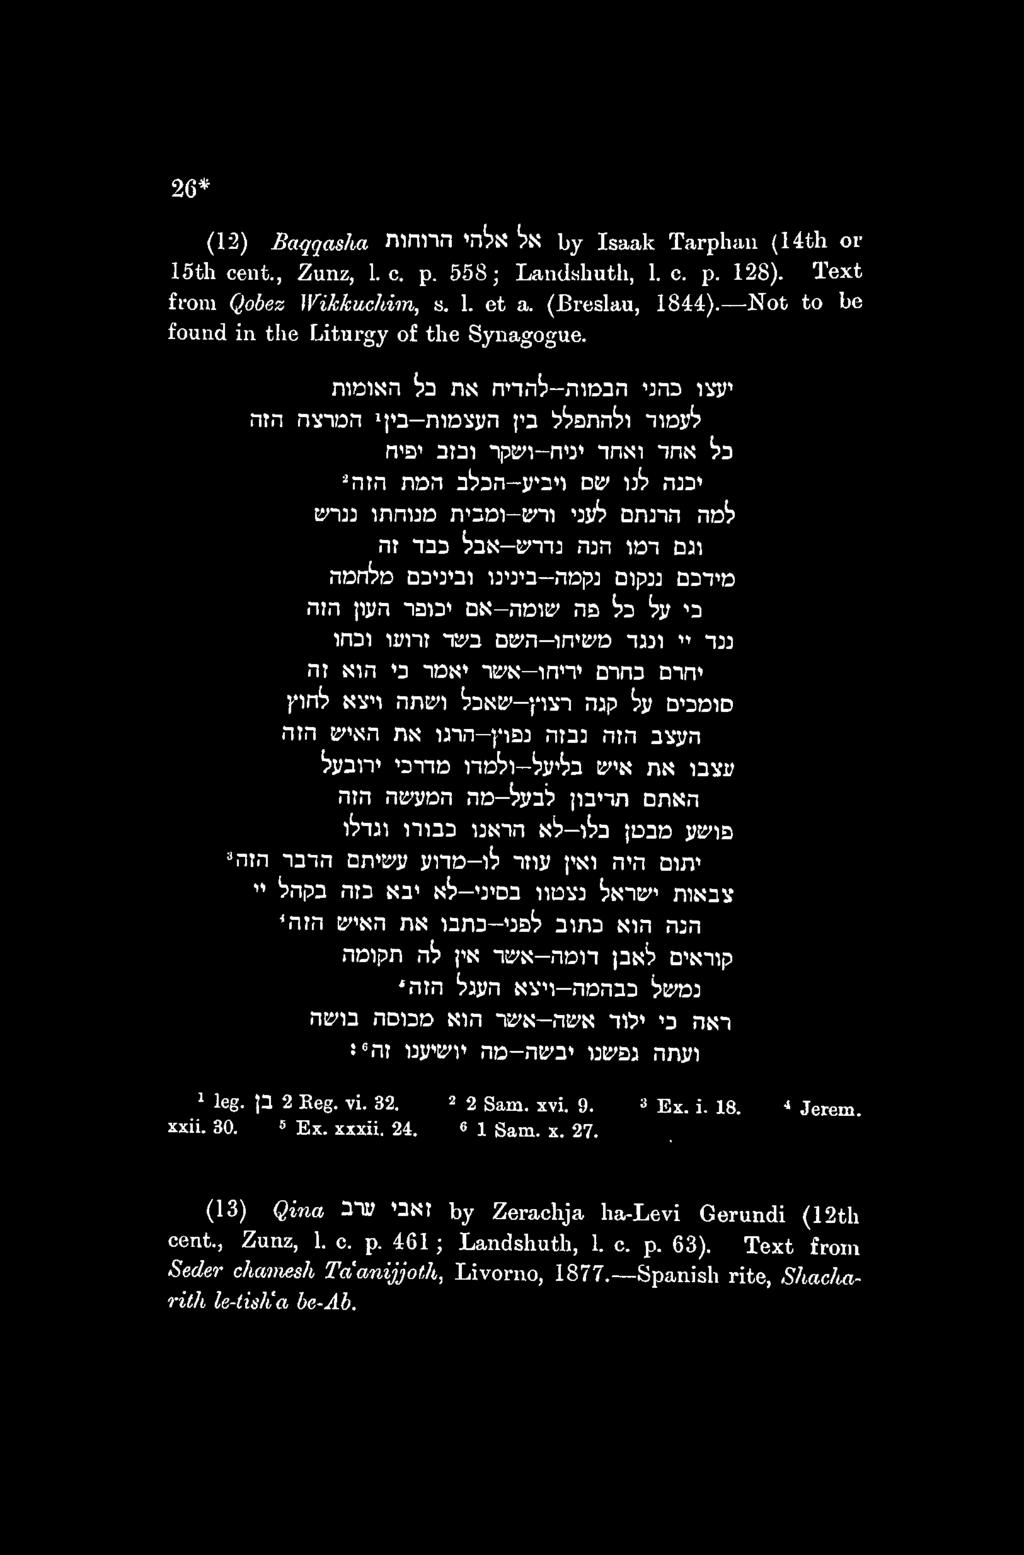 26* (12) Baqqasha ninnn >rh^ i?t< by Isaak Tarplmii (14th or ISth cent., Zunz, I.e. p. 558; Landshuth, 1. c. p. 128). Text from Qobez Wikkuchim, s. 1. et a. (Breslau, 1844).